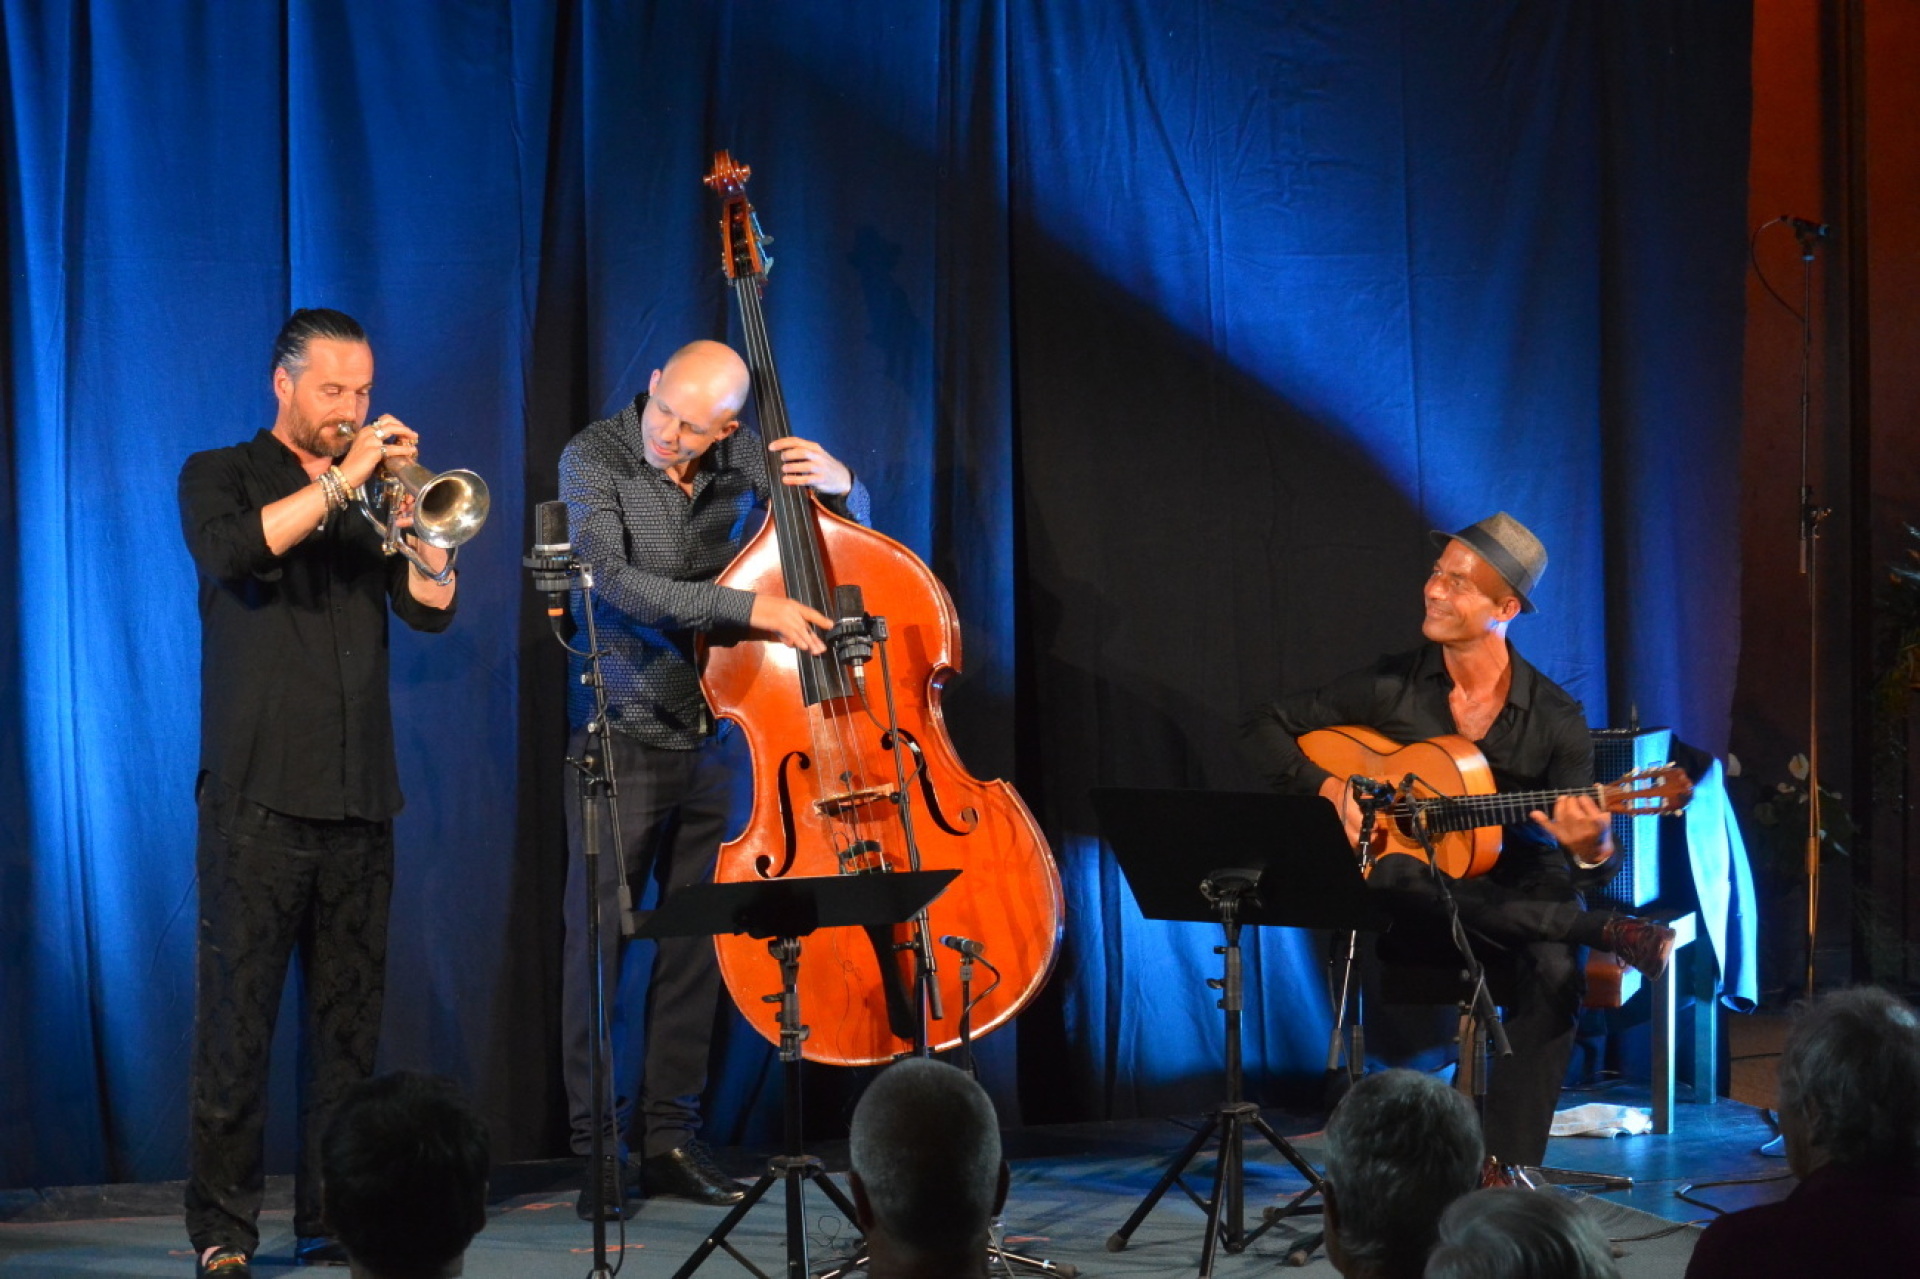 Daniel Woodtli, Flügelhorn; Lorenz Beyeler, Kontrabass; Nick Perrin, Gitarre  (Fotos: Markus Bachmann)